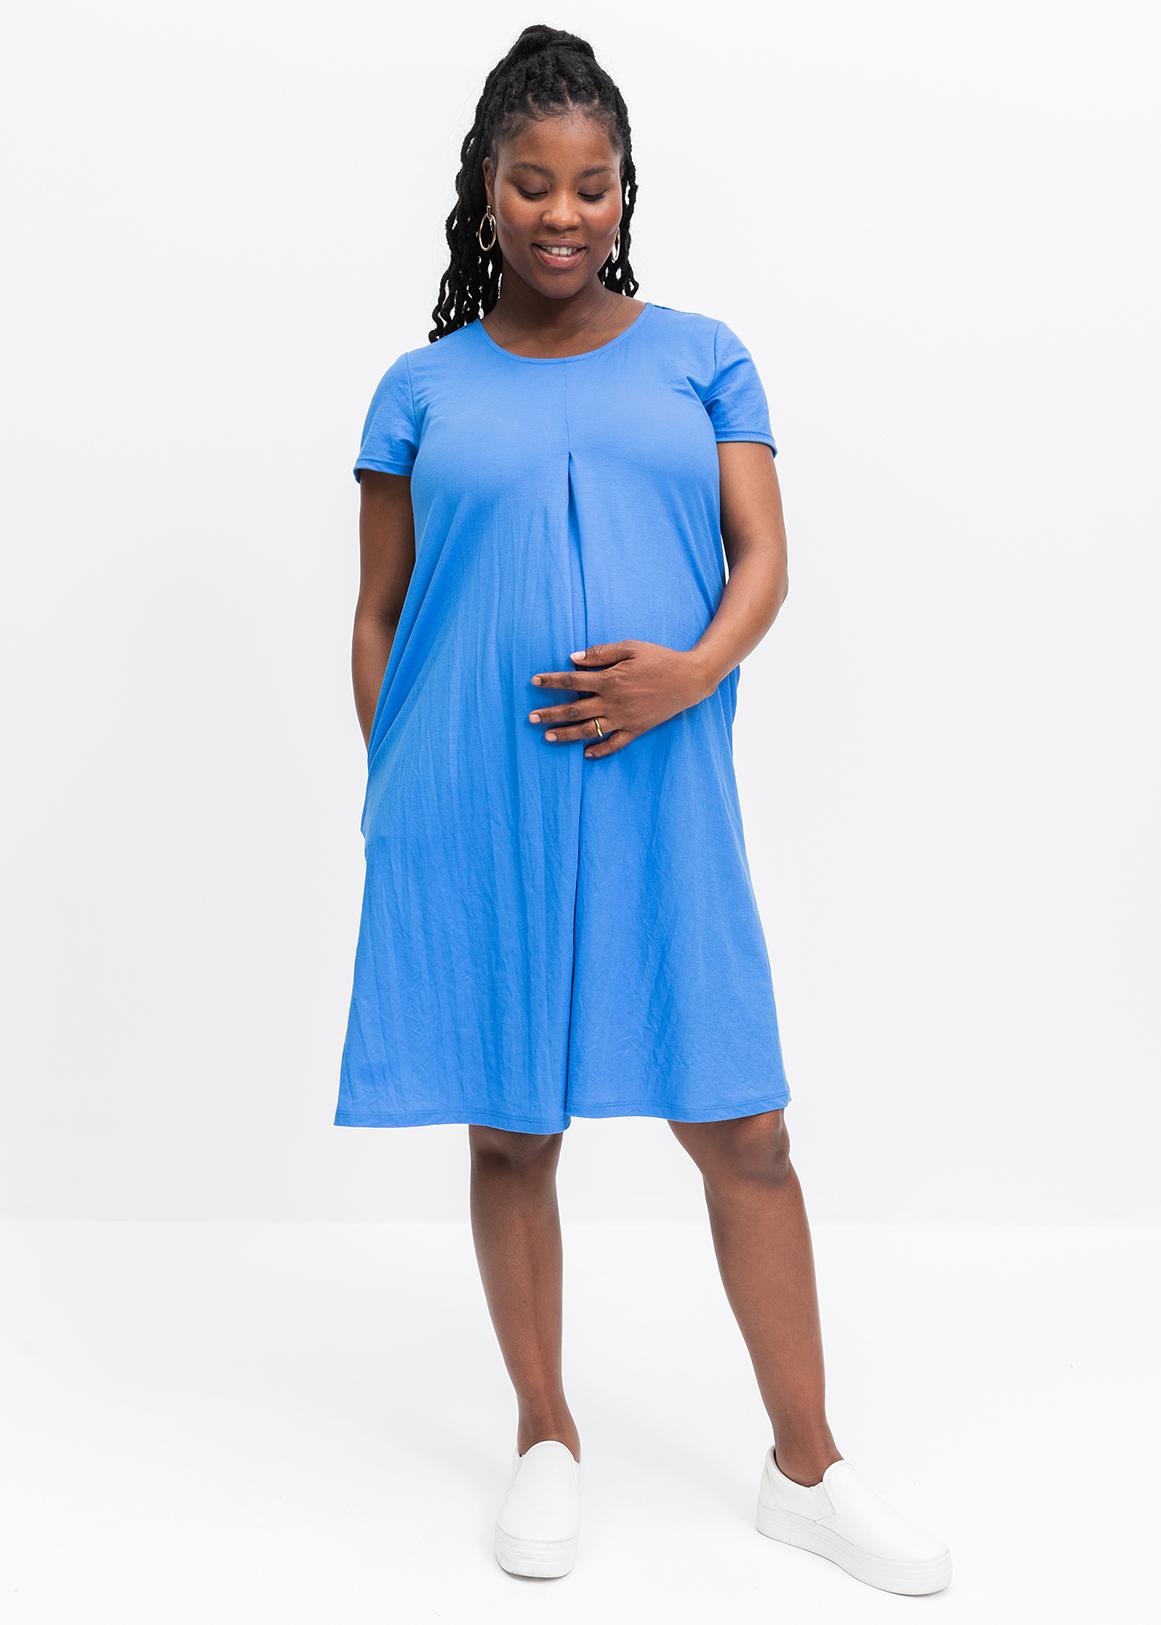 https://assets.woolworthsstatic.co.za/Front-Pleat-Maternity-Dress-BRIGHT-BLUE-507102272.jpg?V=WR9c&o=eyJidWNrZXQiOiJ3dy1vbmxpbmUtaW1hZ2UtcmVzaXplIiwia2V5IjoiaW1hZ2VzL2VsYXN0aWNlcmEvcHJvZHVjdHMvaGVyby8yMDIzLTA4LTI1LzUwNzEwMjI3Ml9CUklHSFRCTFVFX2hlcm8uanBnIn0&q=75